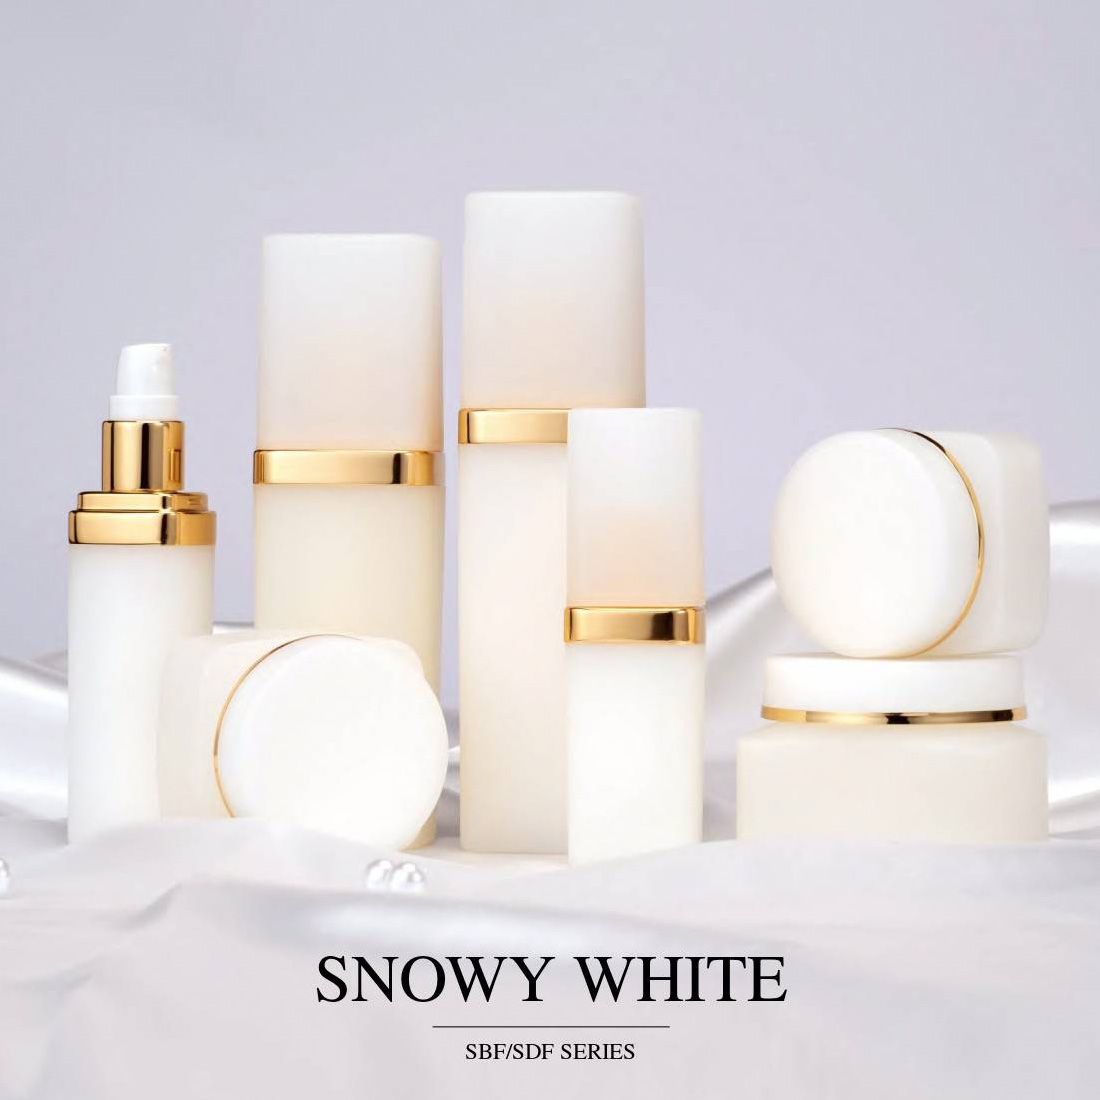 Snowy White (Eco PP 럭셔리 화장품 및 스킨케어 포장) SBF/SDF 시리즈